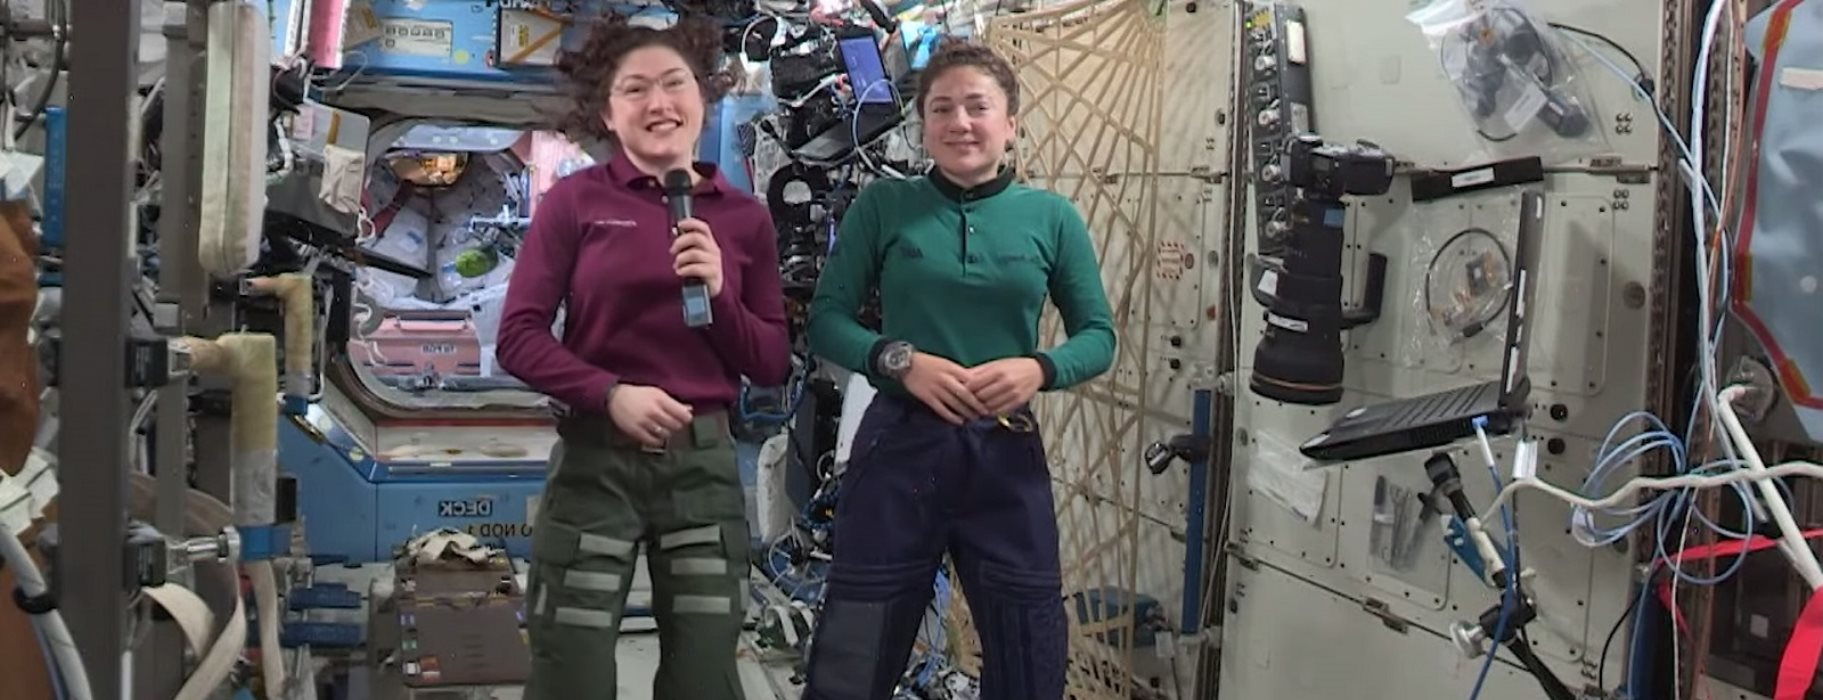 NASA: Στις 21/10 ο αποκλειστικός γυναικείος περίπατος στο διάστημα